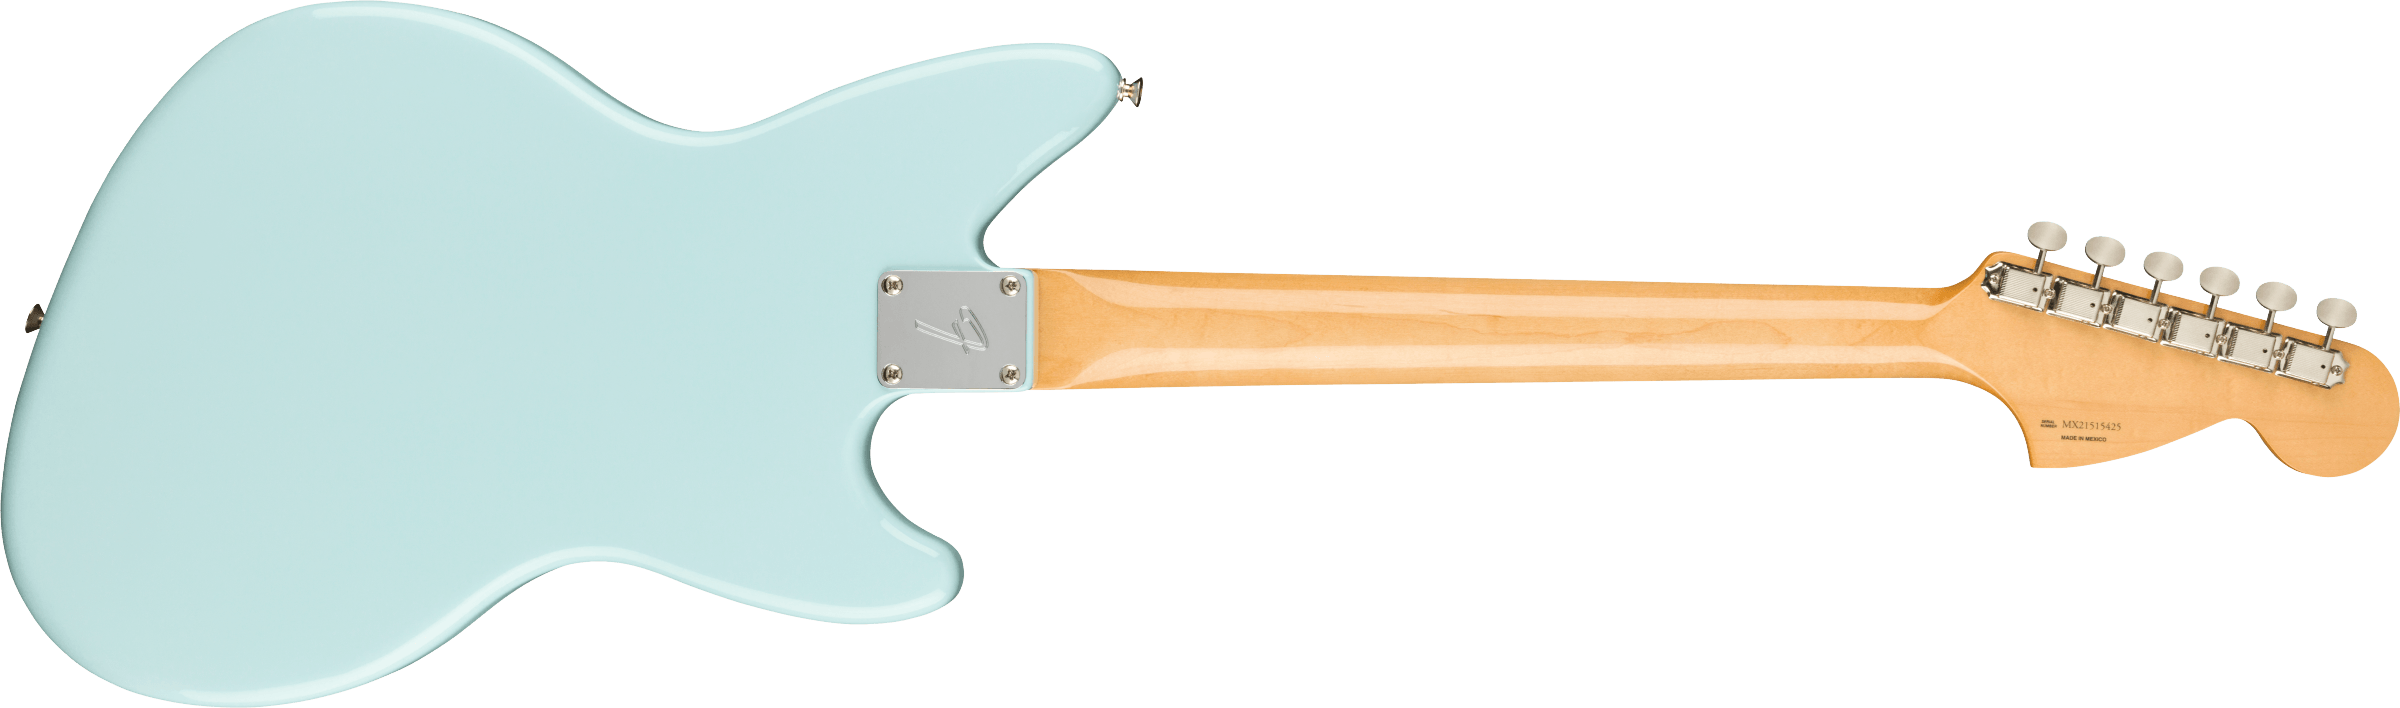 Fender Jag-stang Kurt Cobain Artist Gaucher Hs Trem Rw - Sonic Blue - Linkshandige elektrische gitaar - Variation 1